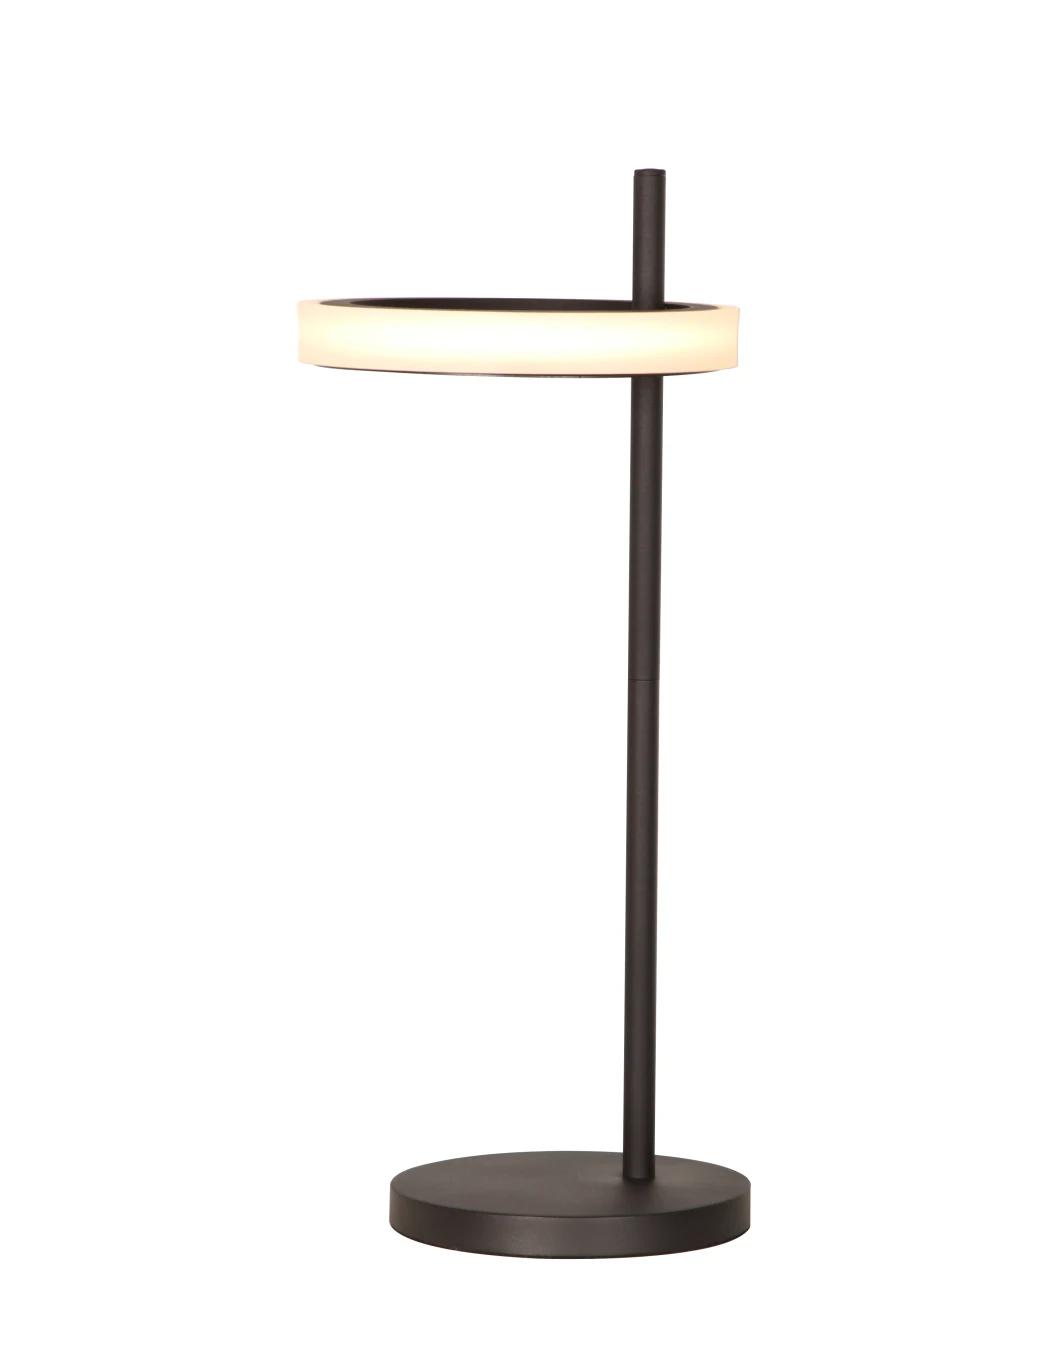 Masivel Lighting Modern Nordic Room Nightstand Creative Function Table Lamp